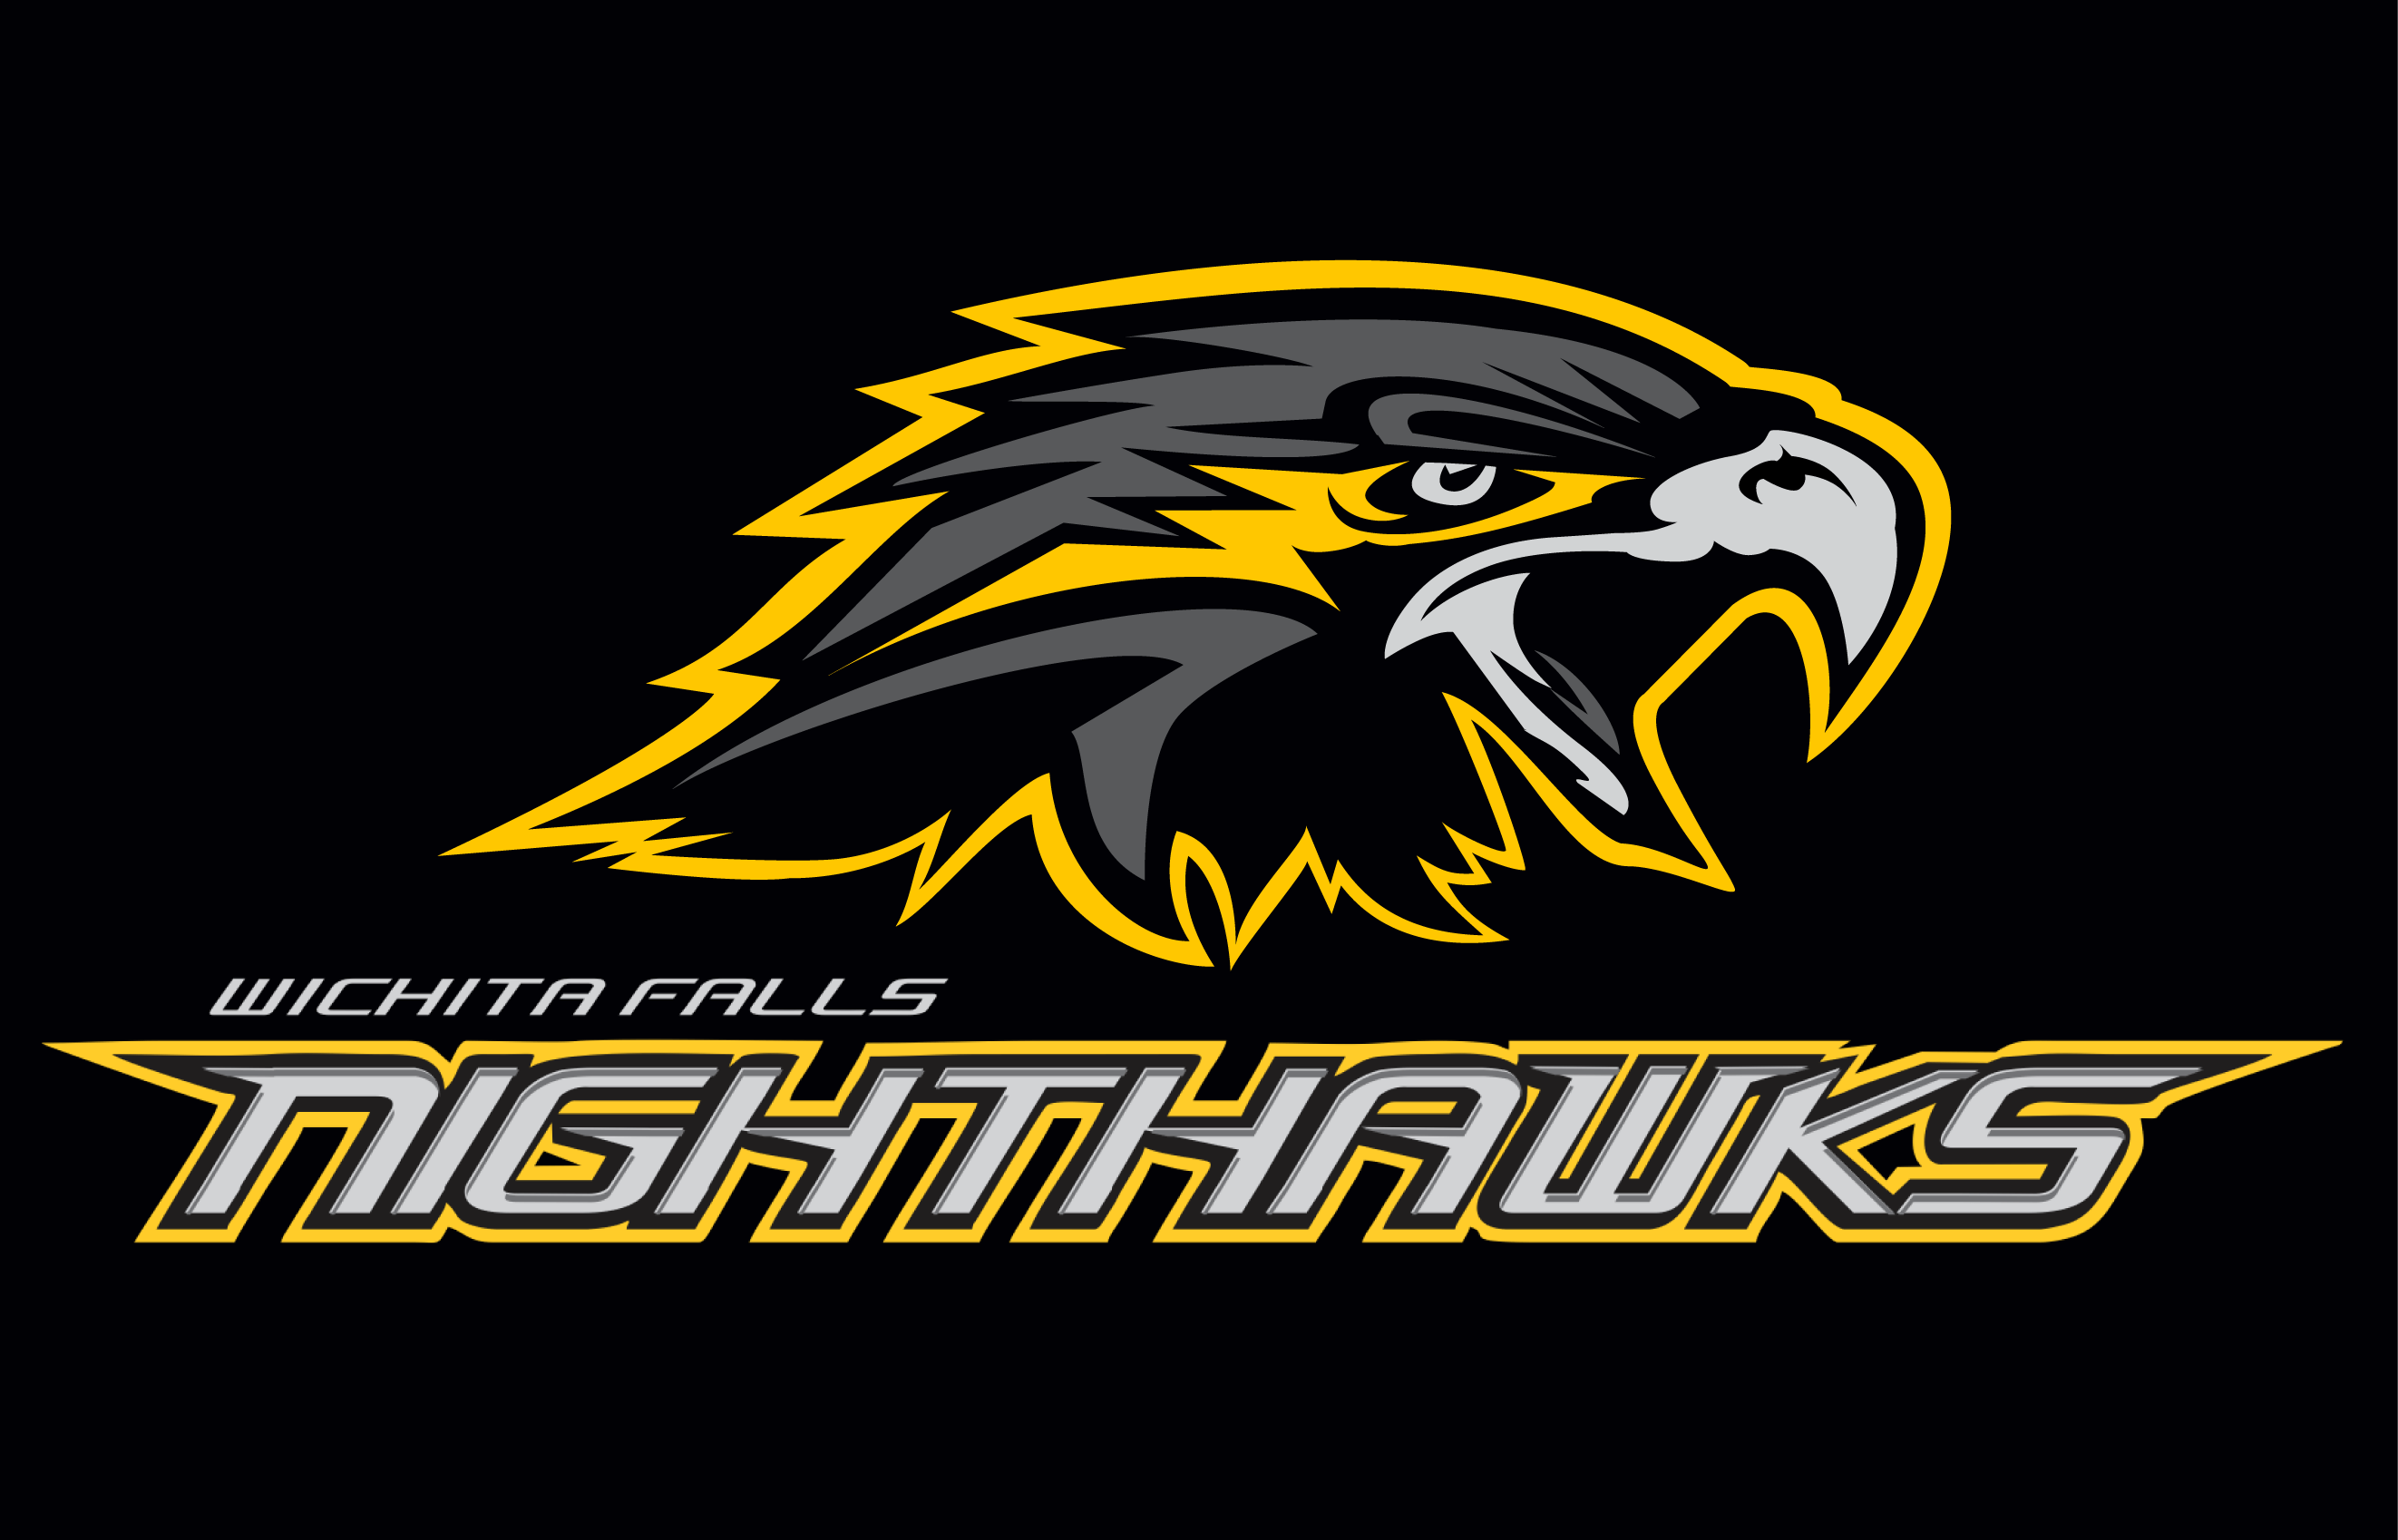 Nighthawks Logo - Wichita Falls Nighthawks Primary Dark Logo - Indoor Football League ...